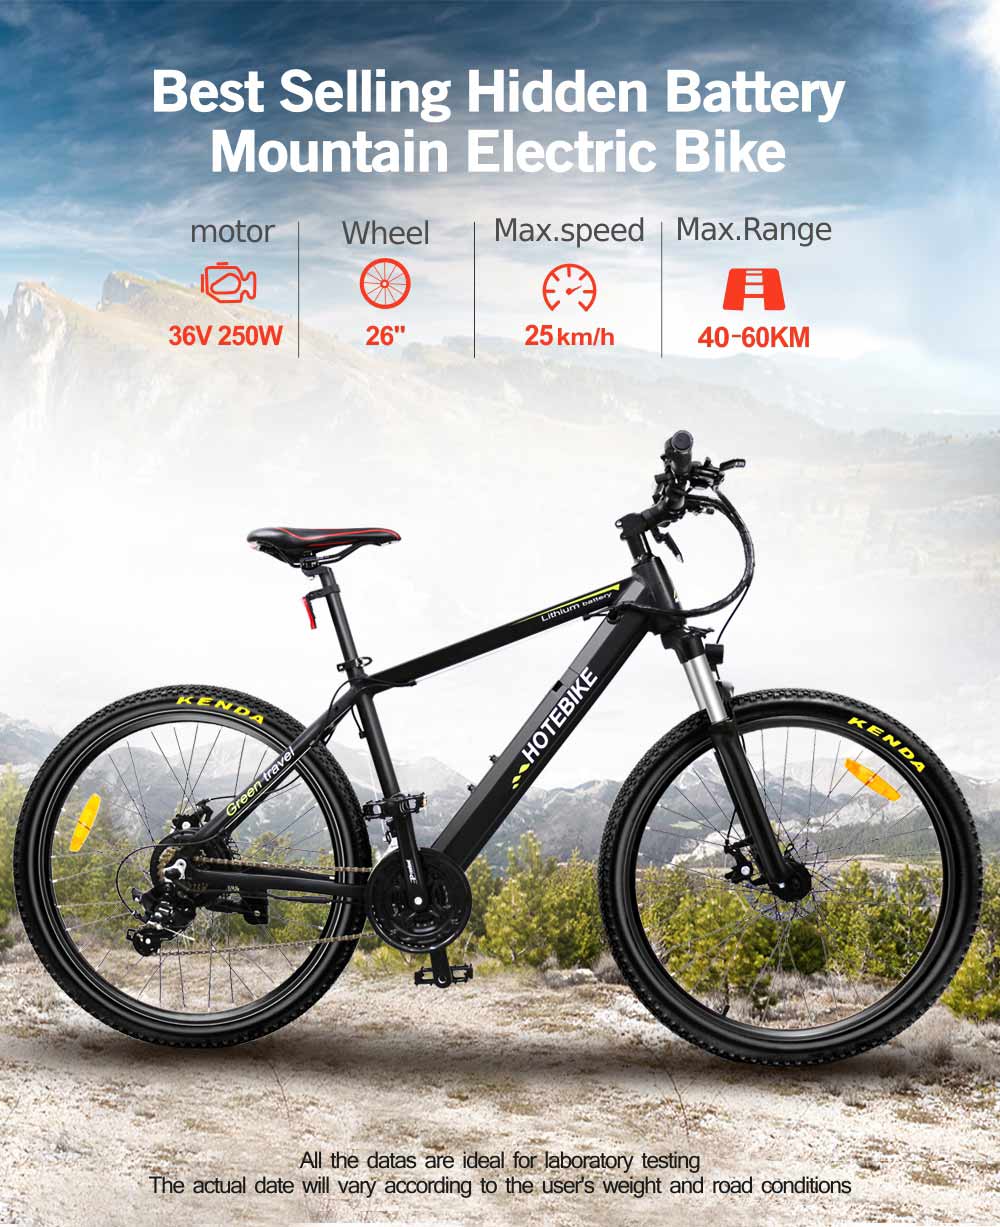 Find the Best Value Electric bike - Blog - 1